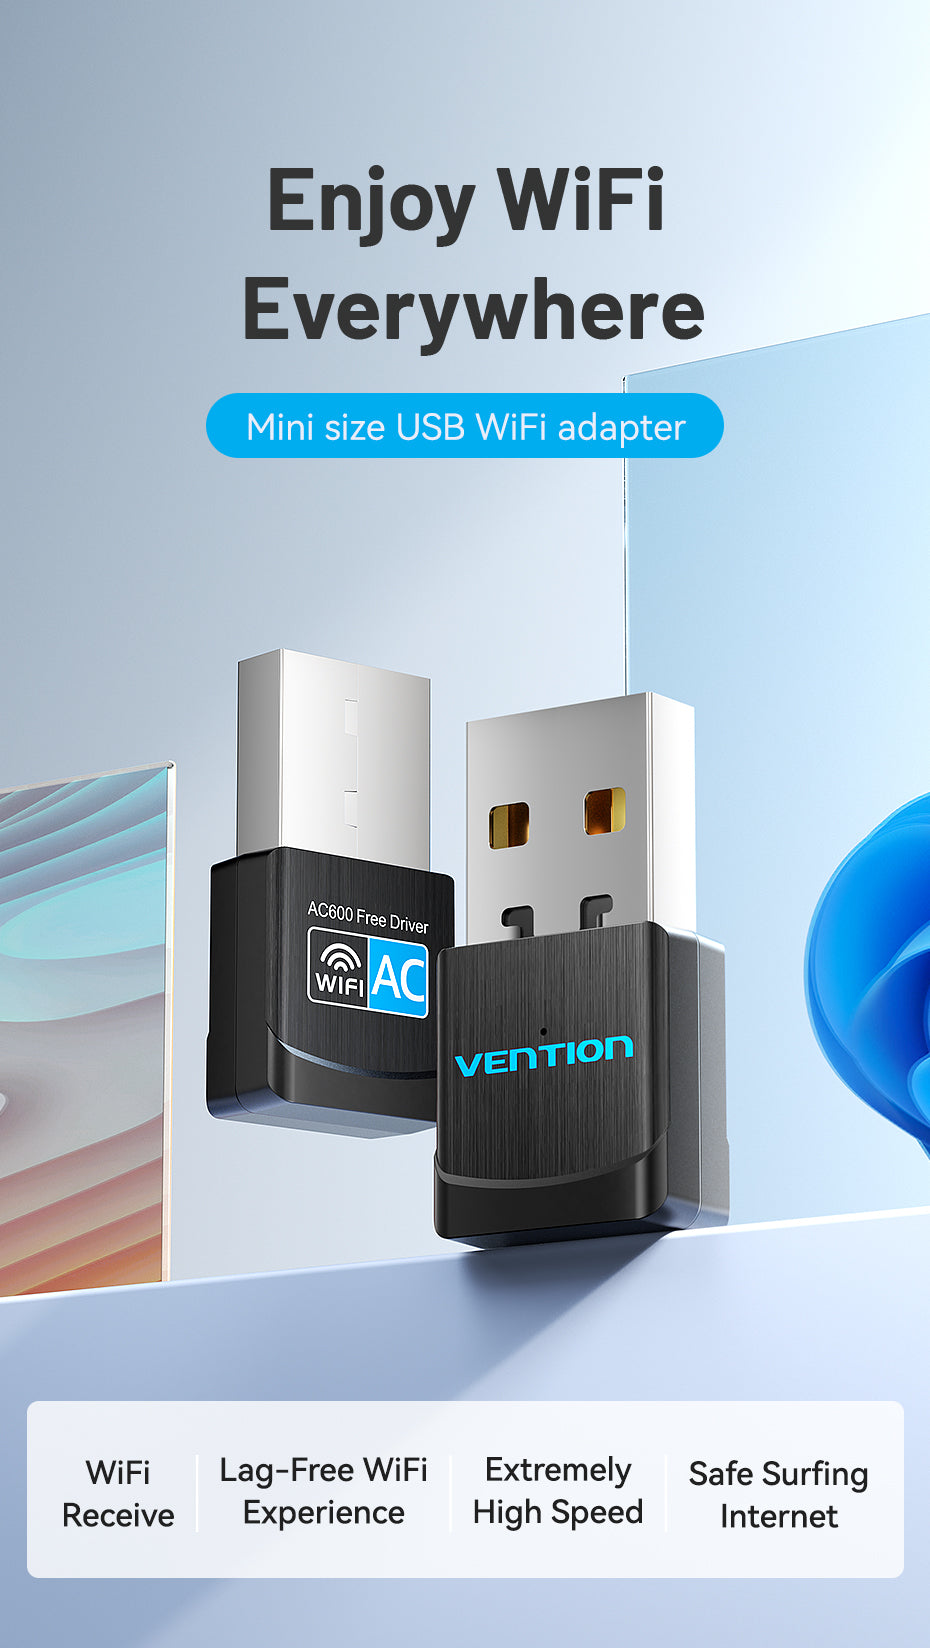 Adaptador USB Wi-Fi/Adaptador USB Wifi de Doble Banda 2.4G/5G Negro